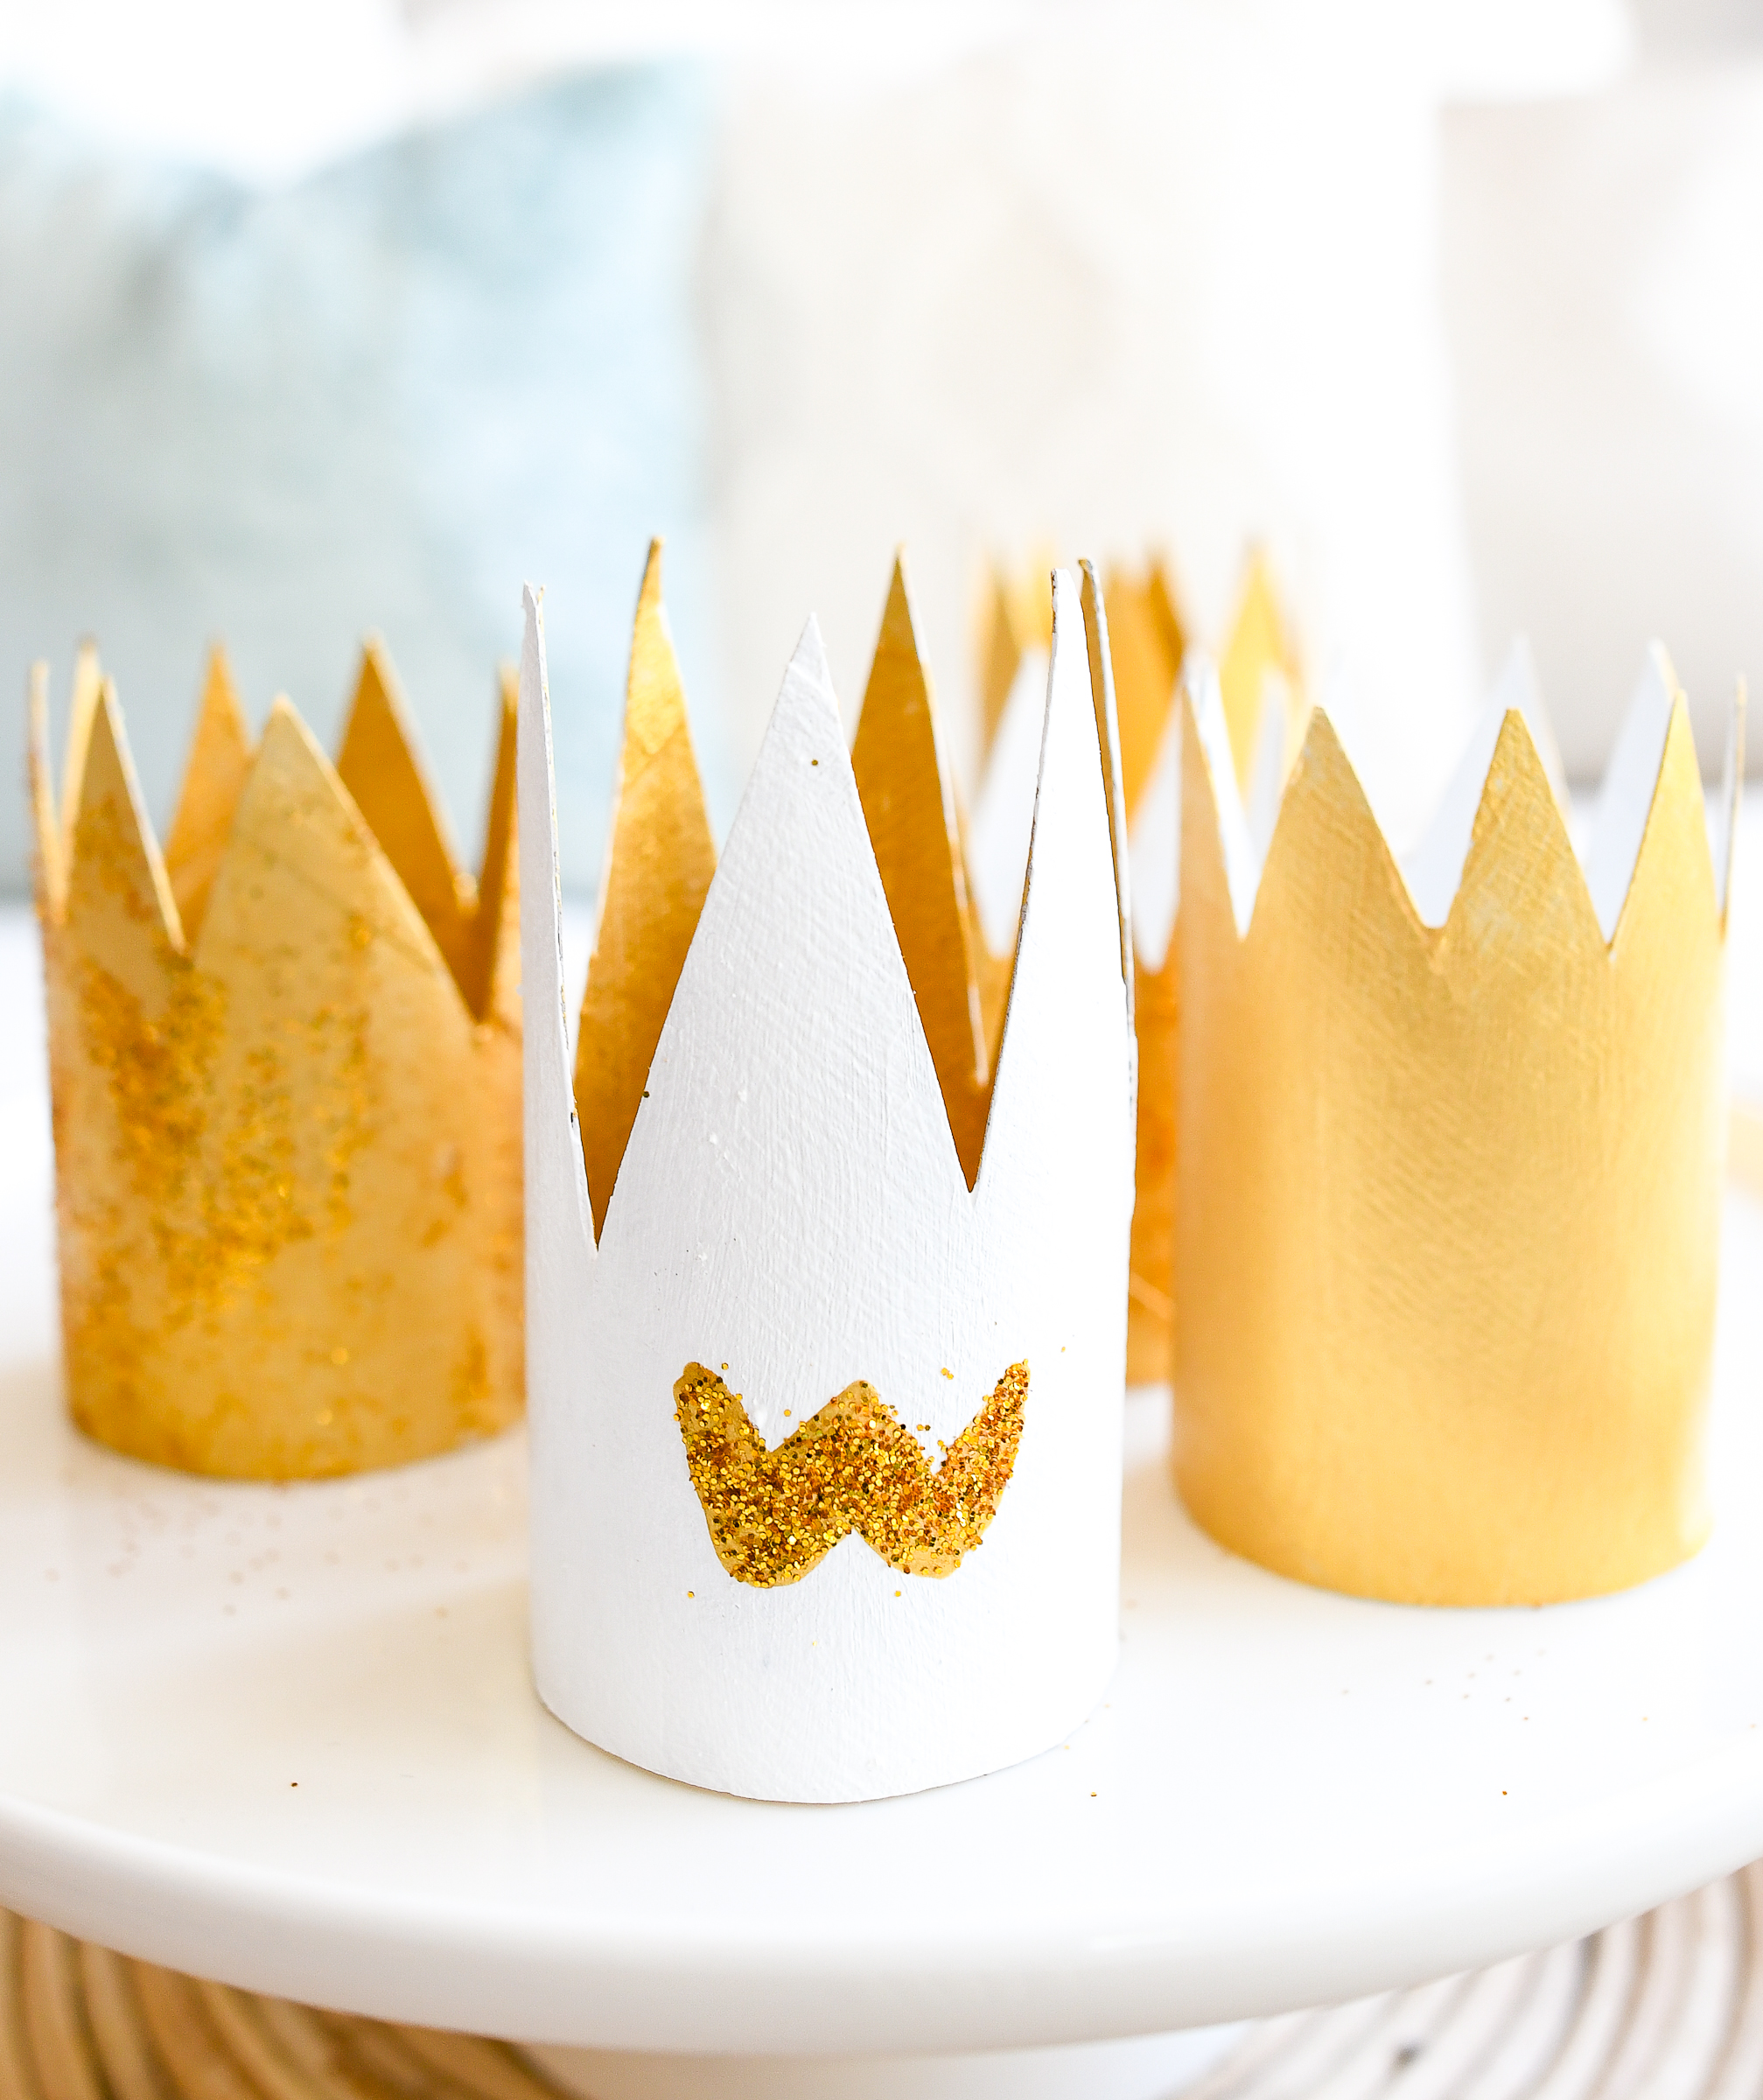 koningsdag versiering kroontjes van wc papier maken